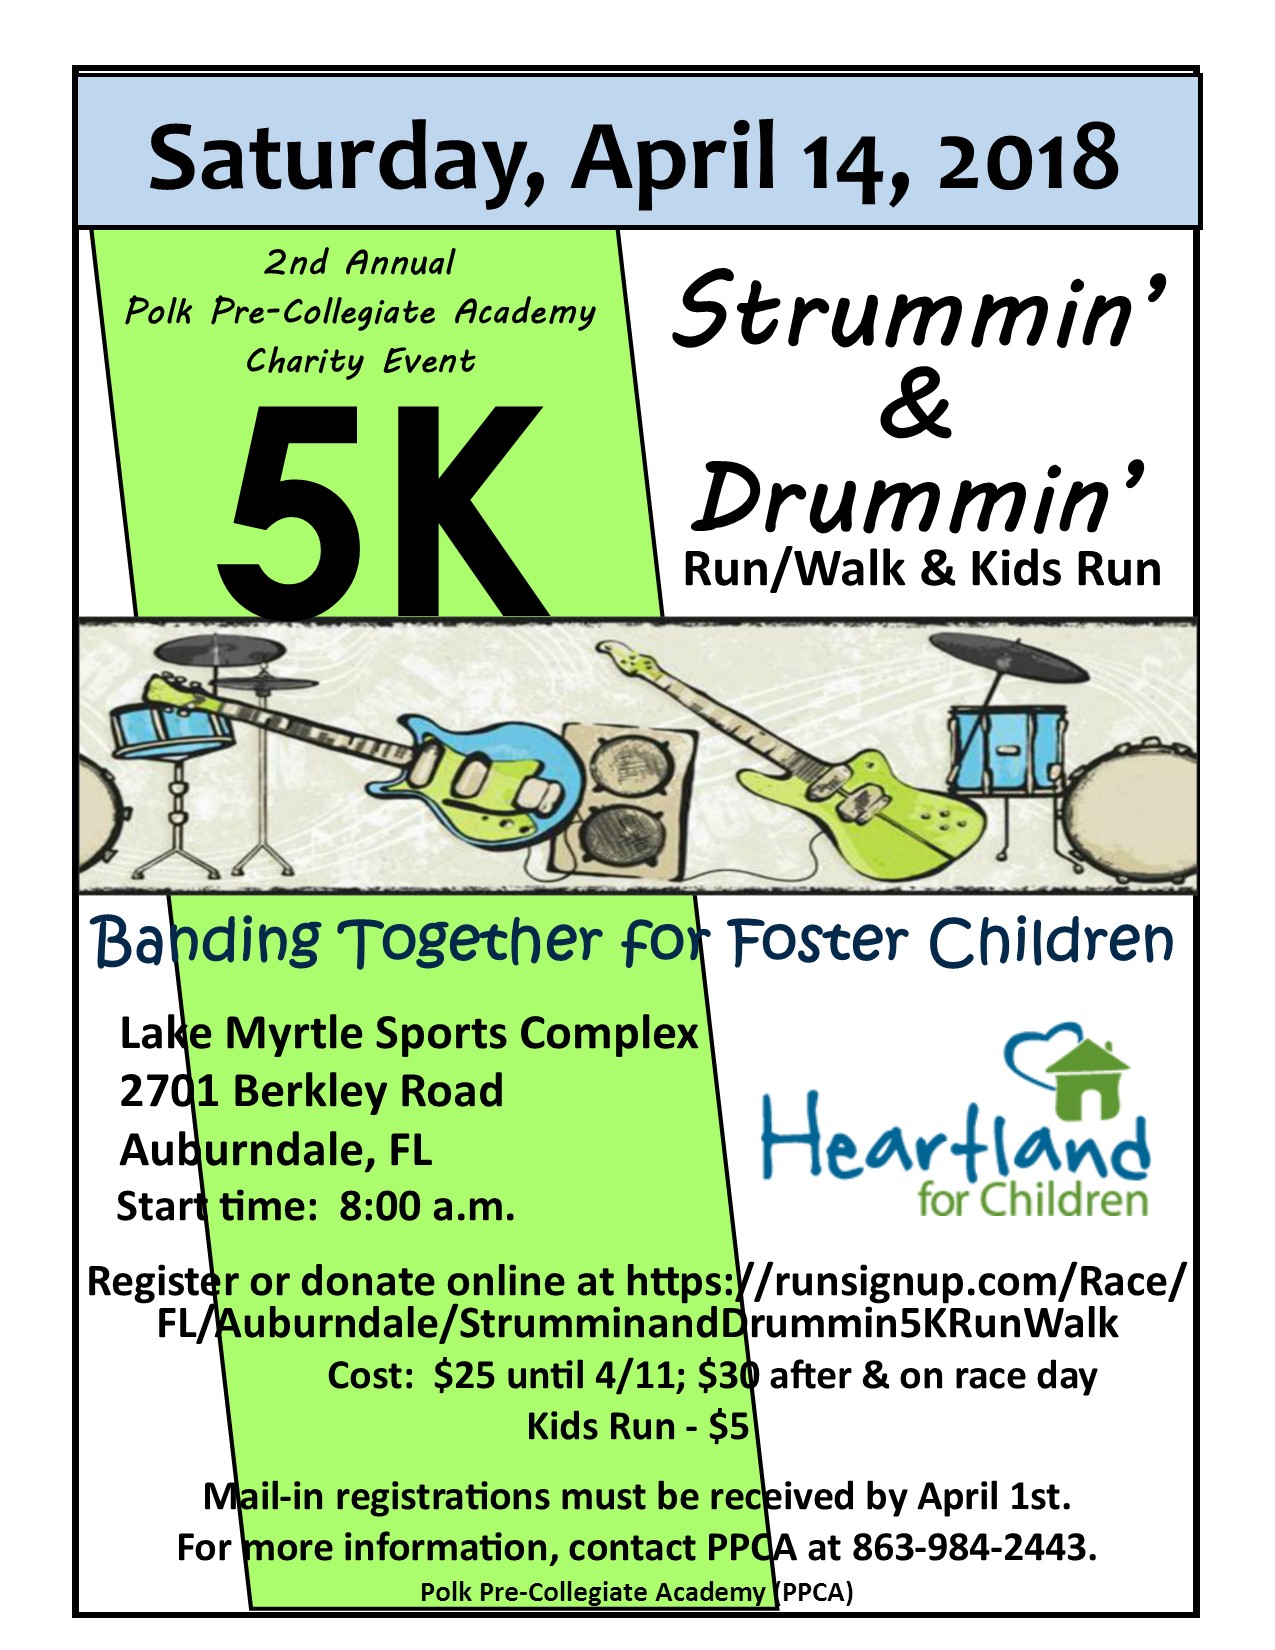 Strummin' & Drummin' 5k Walk/Run to benefit HFC